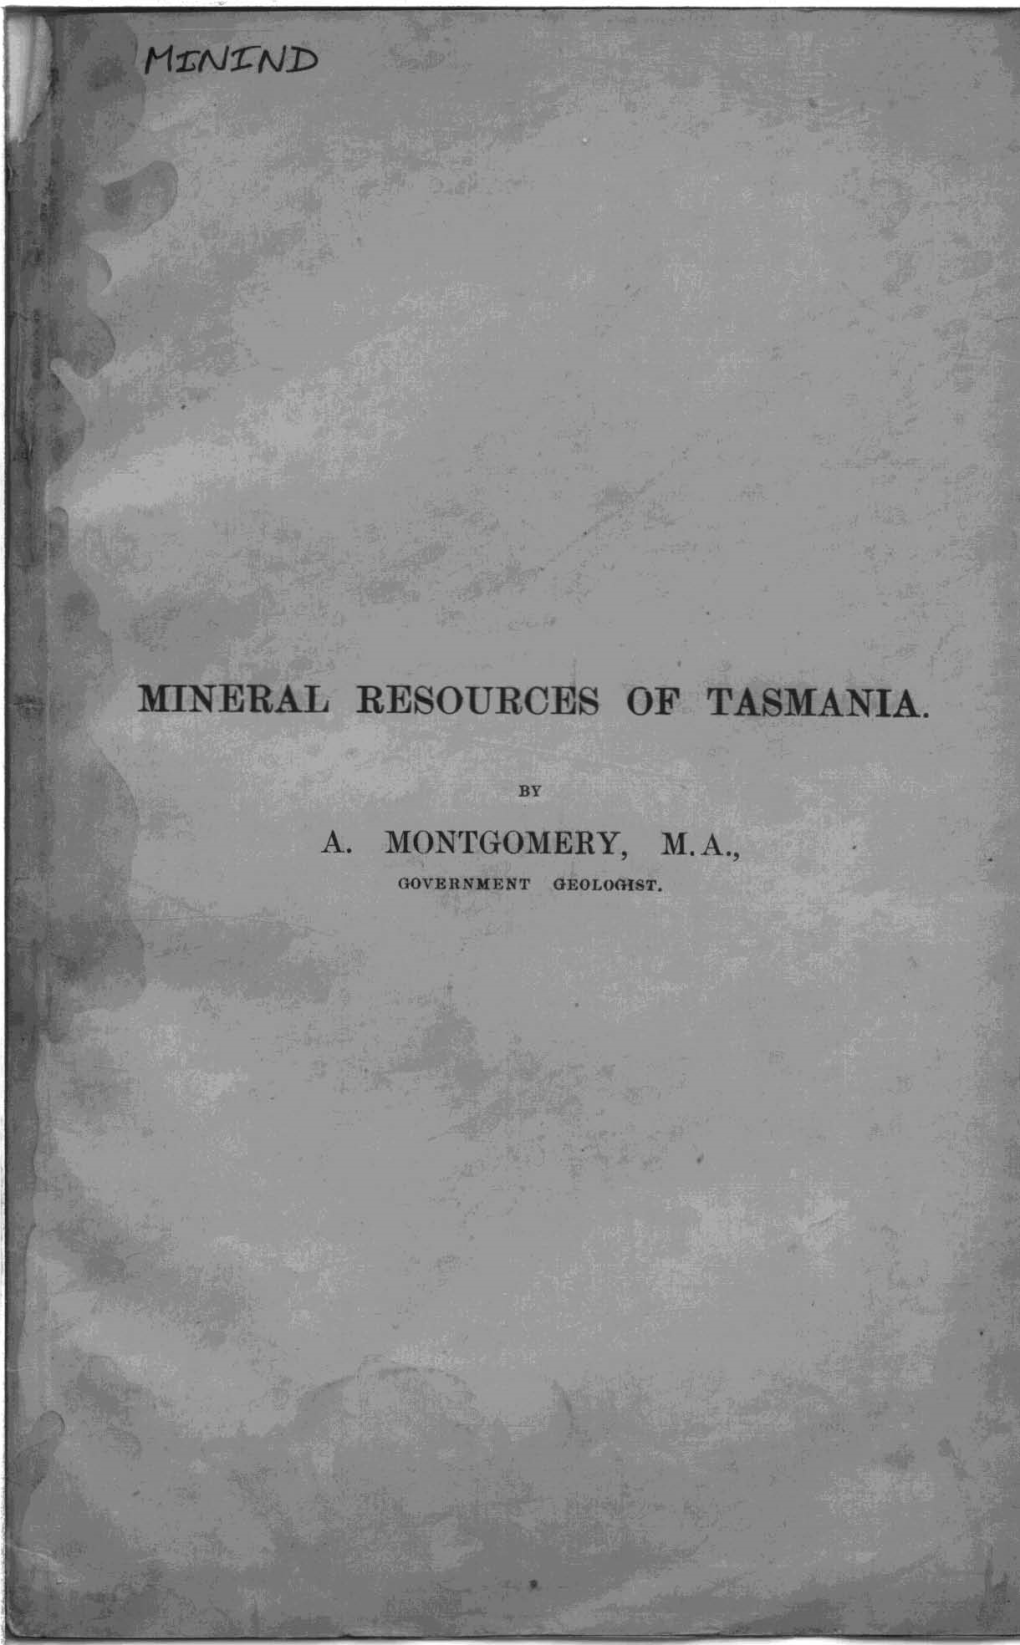 Mineral Resources of Tasmania